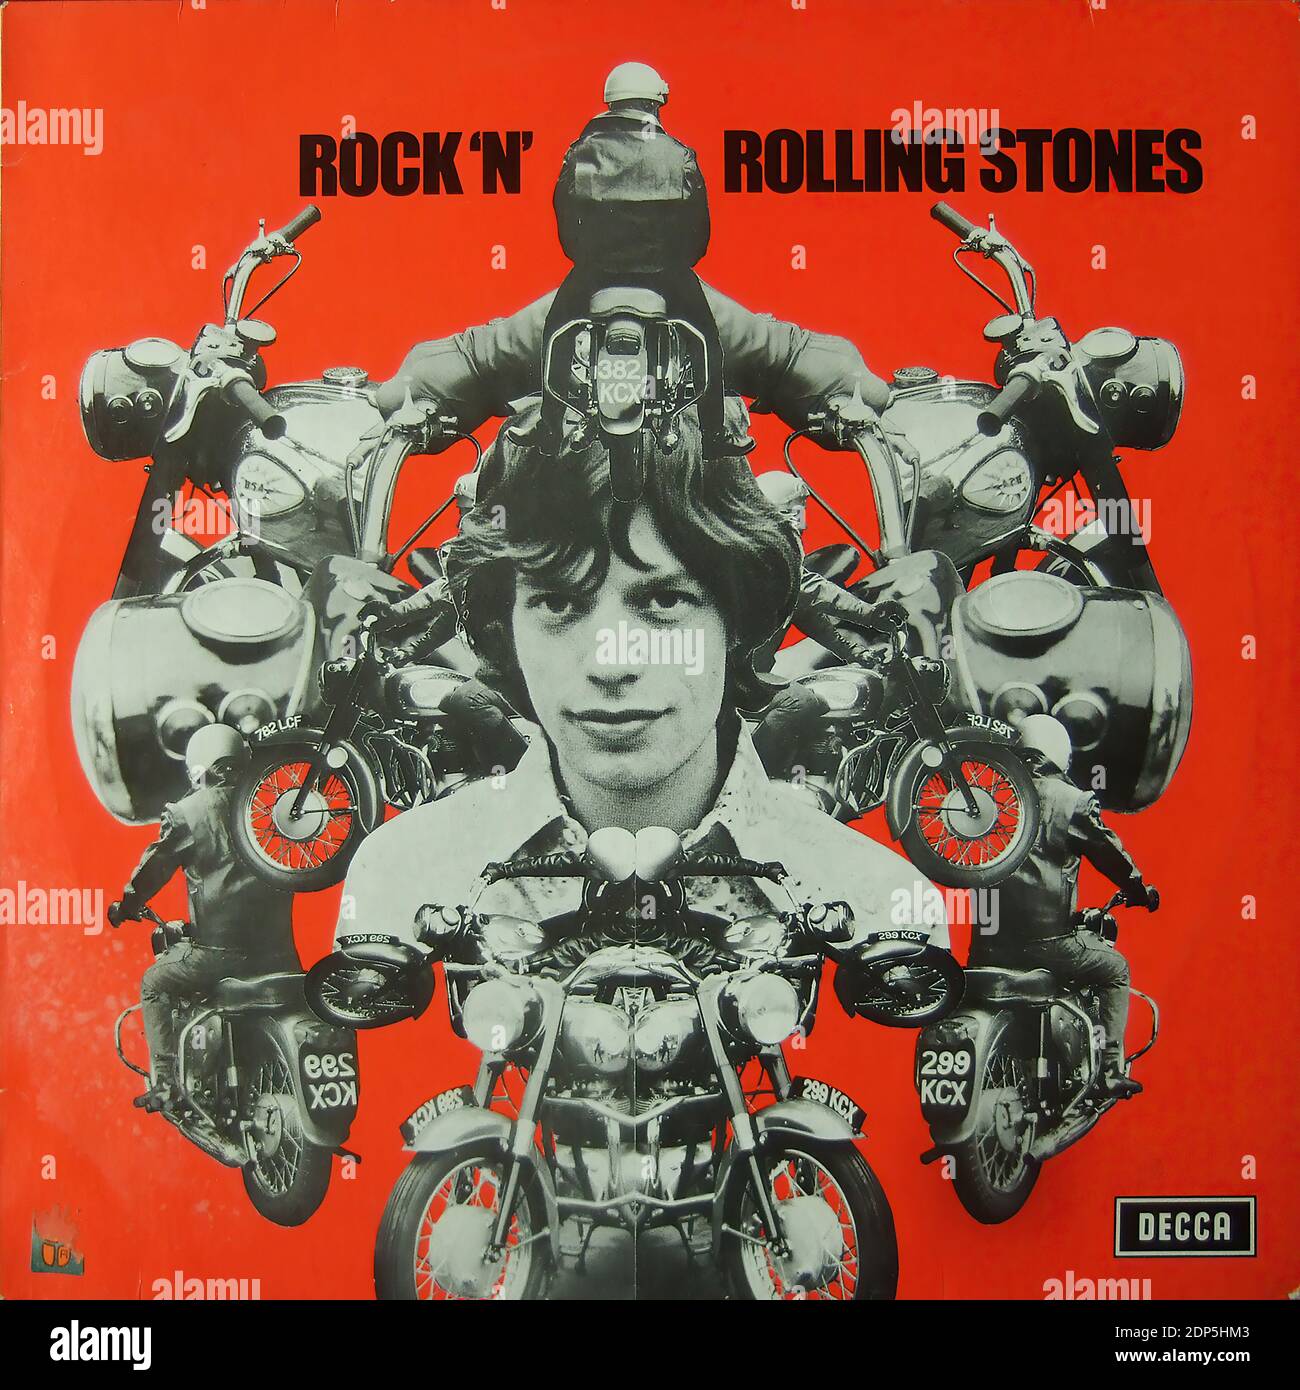 The Rolling Stones - Rock'N' Rolling Stones - Vintage vinyl album cover Stock Photo